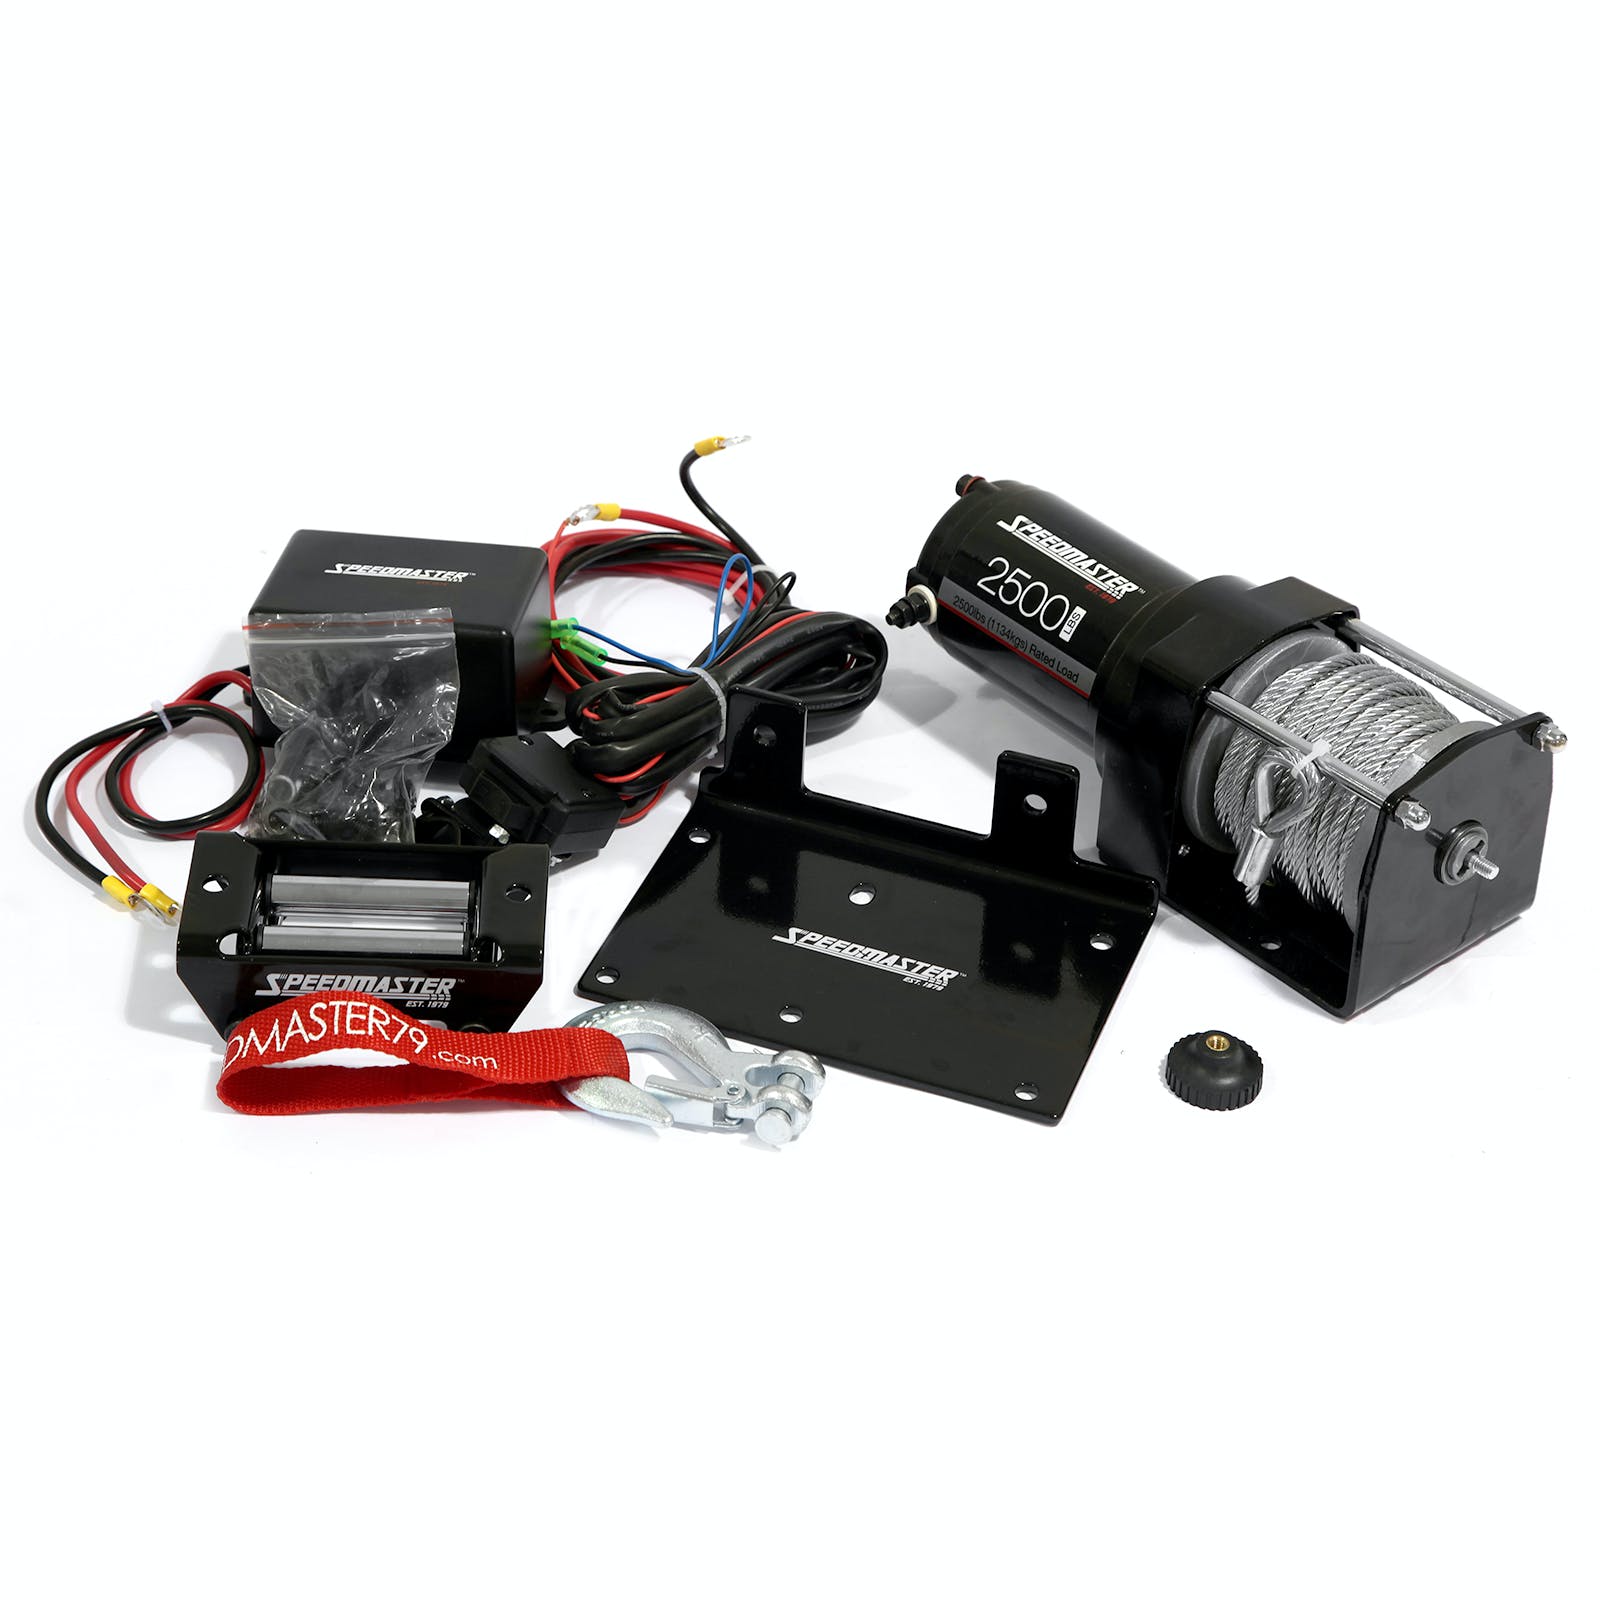 Speedmaster PCE553.1001 2500lbs / 1130kgs 12V Electric ATV Winch Kit w/ Remote Switch